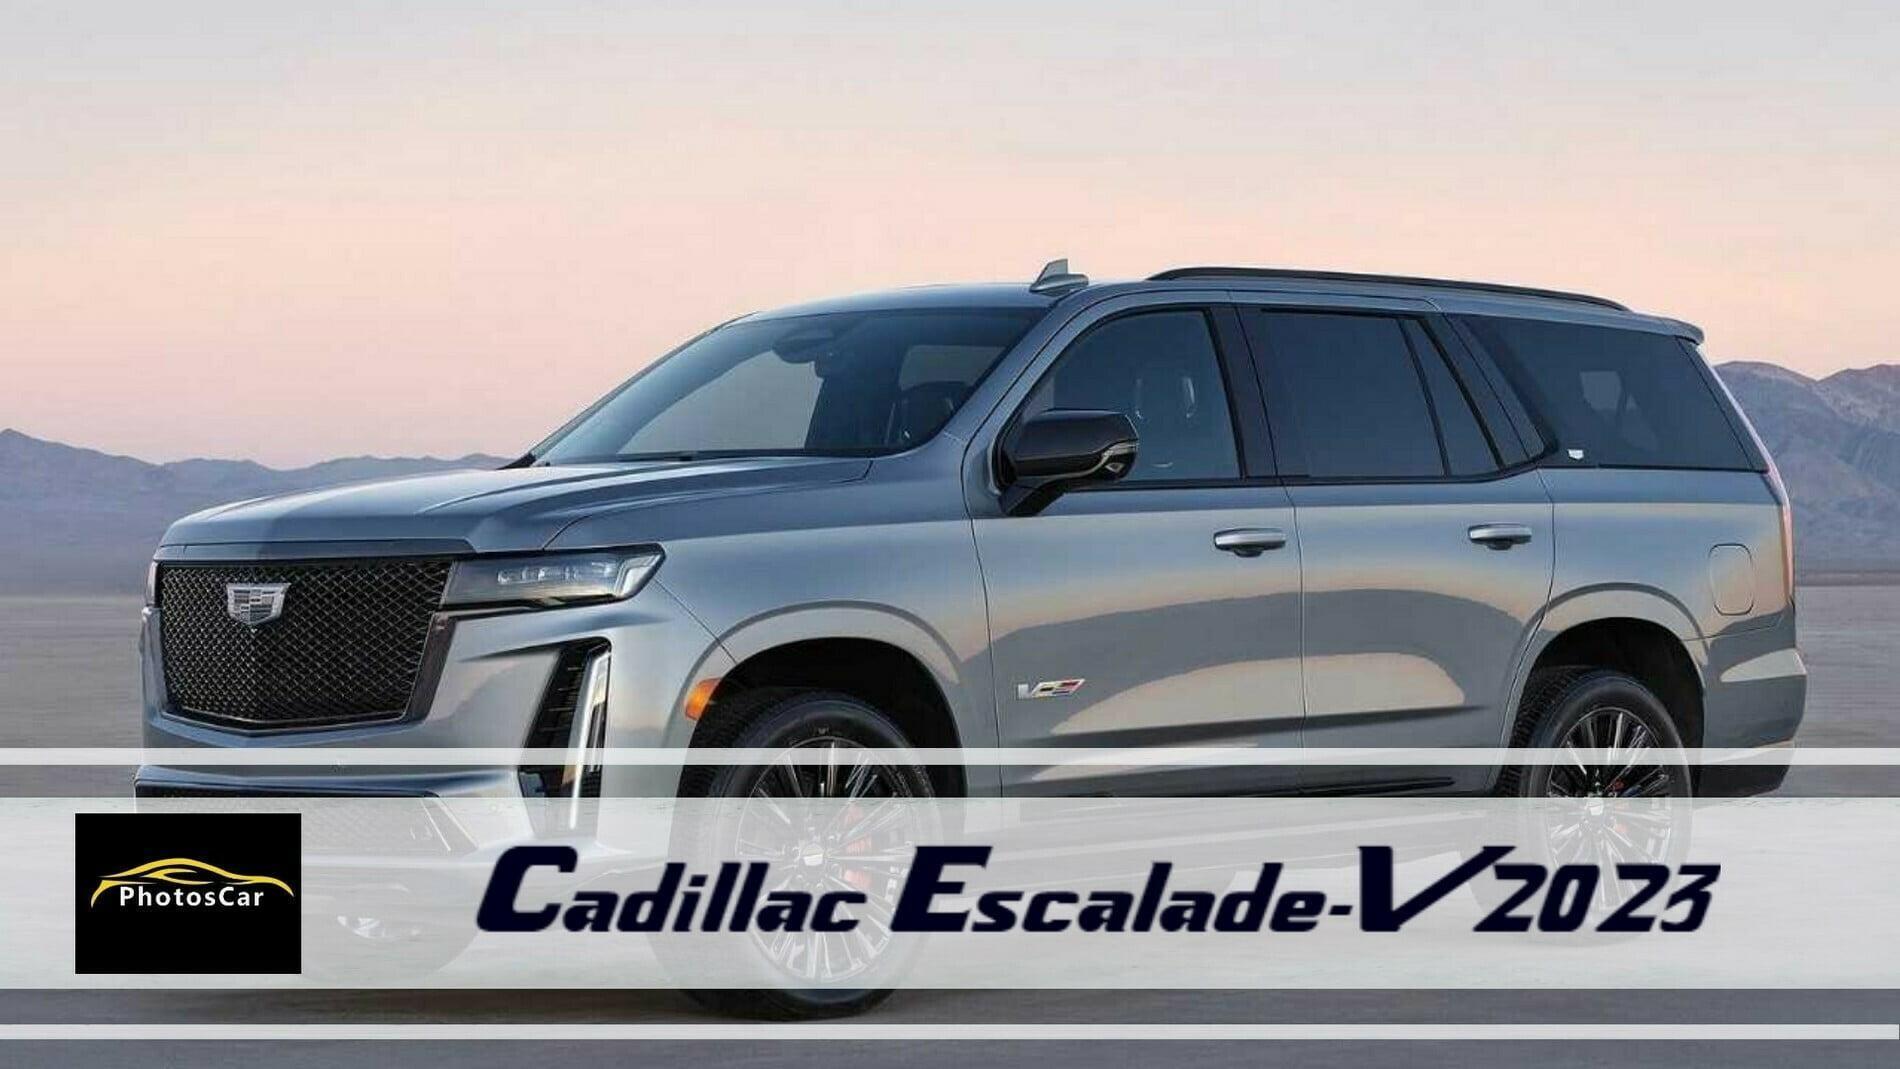 Cadillac Escalade-V 2023